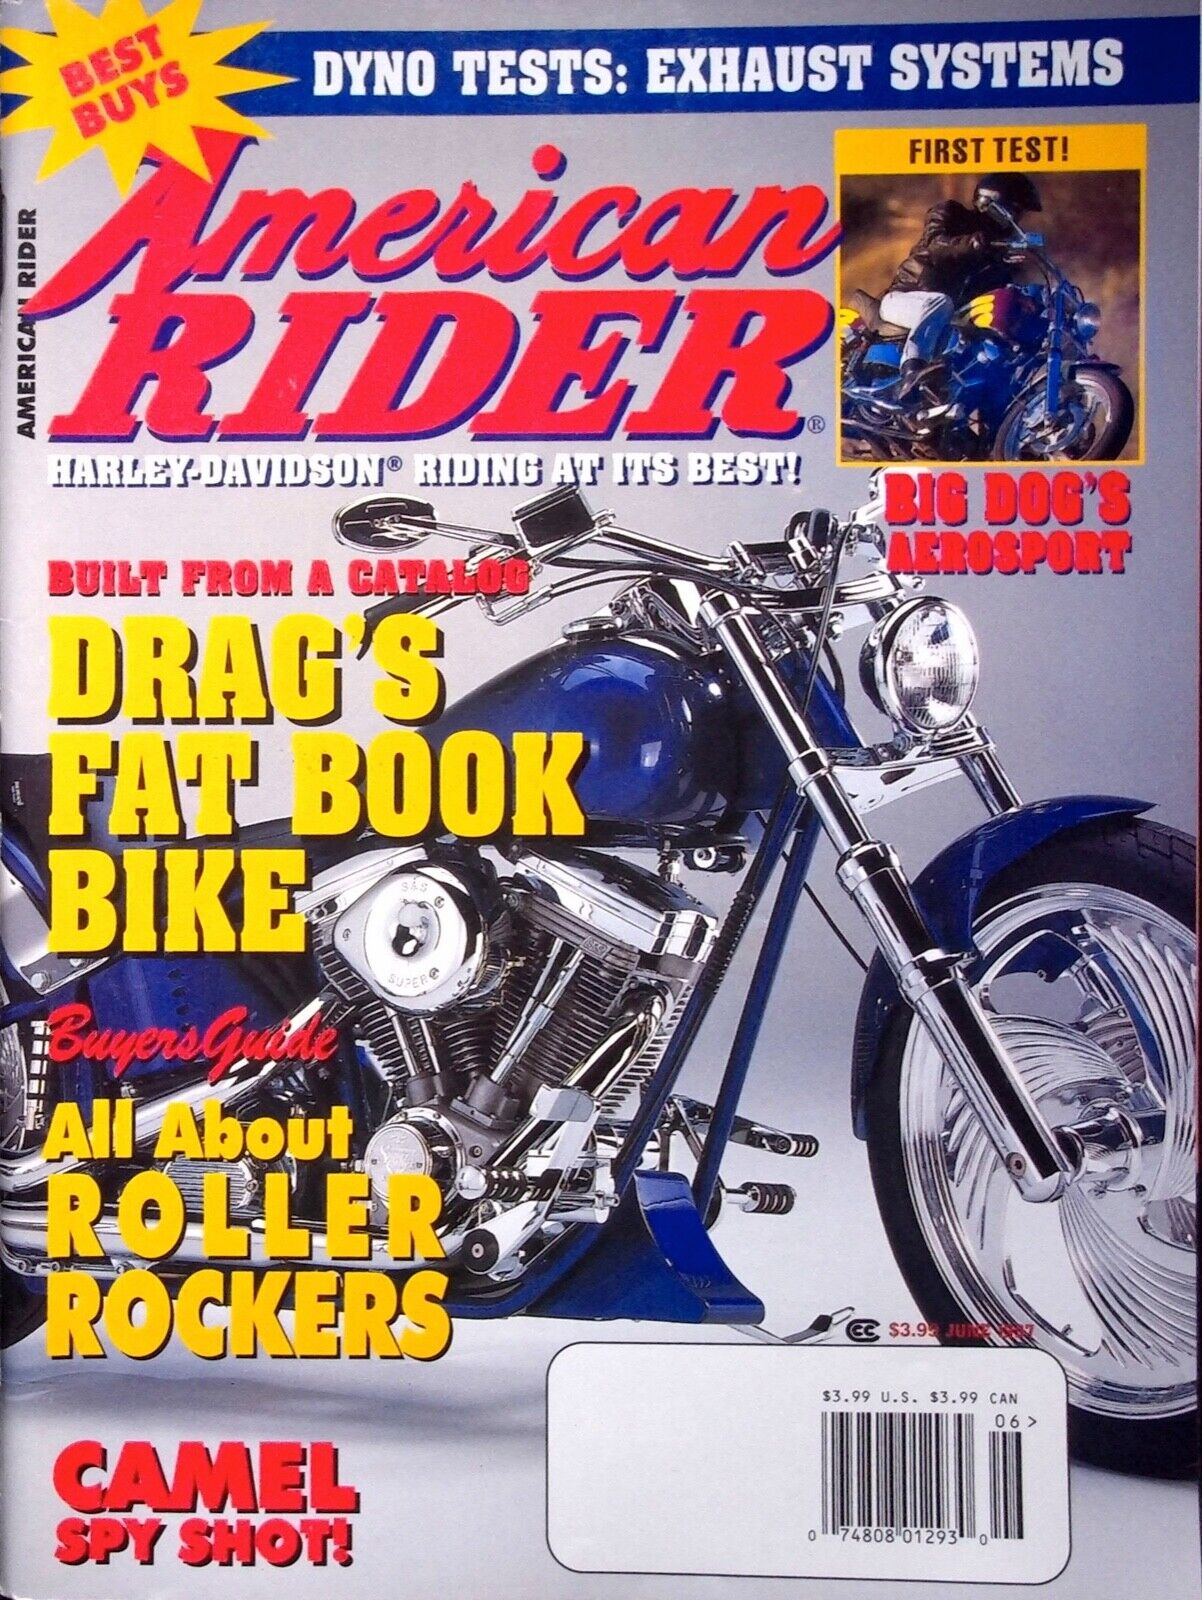 THE FAT BOOK BIKE - AMERICAN RIDER MAGAZINE, JUNE 1997 VOLUME 4, NUMBER 3